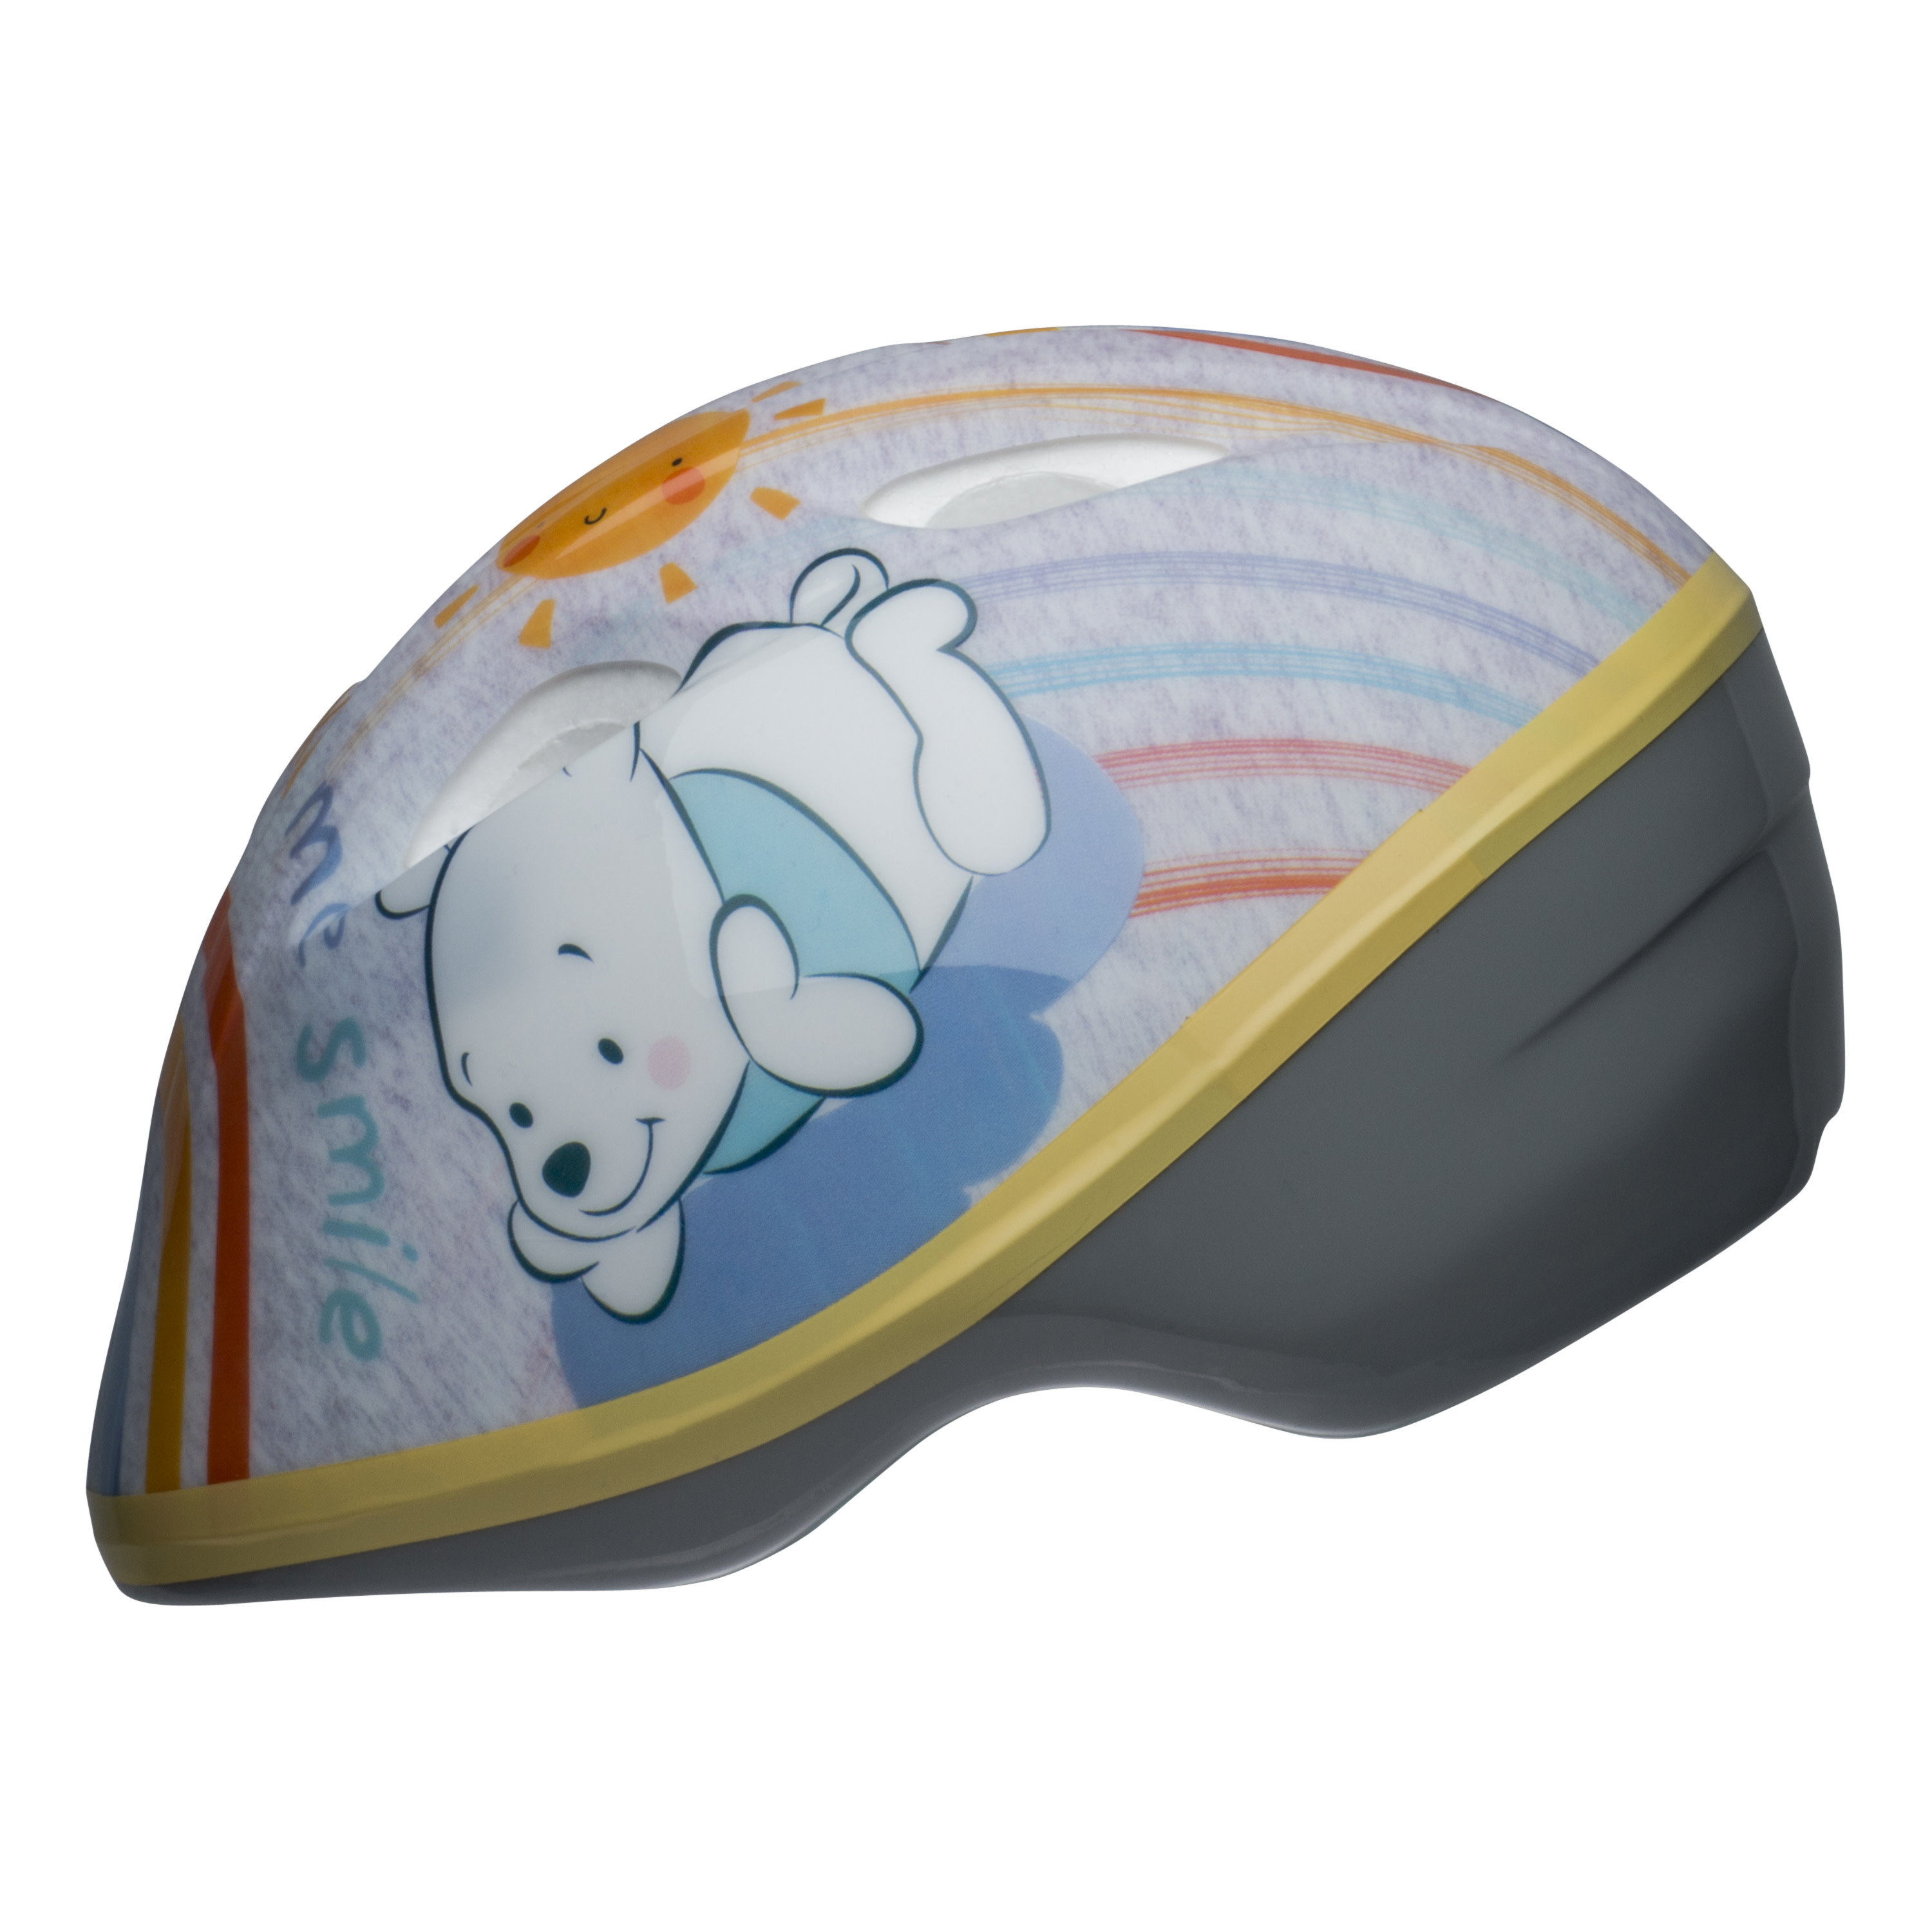 Winnie The Pooh Bike Helmet, Infant 1+ (48-52cm) - image 3 of 6